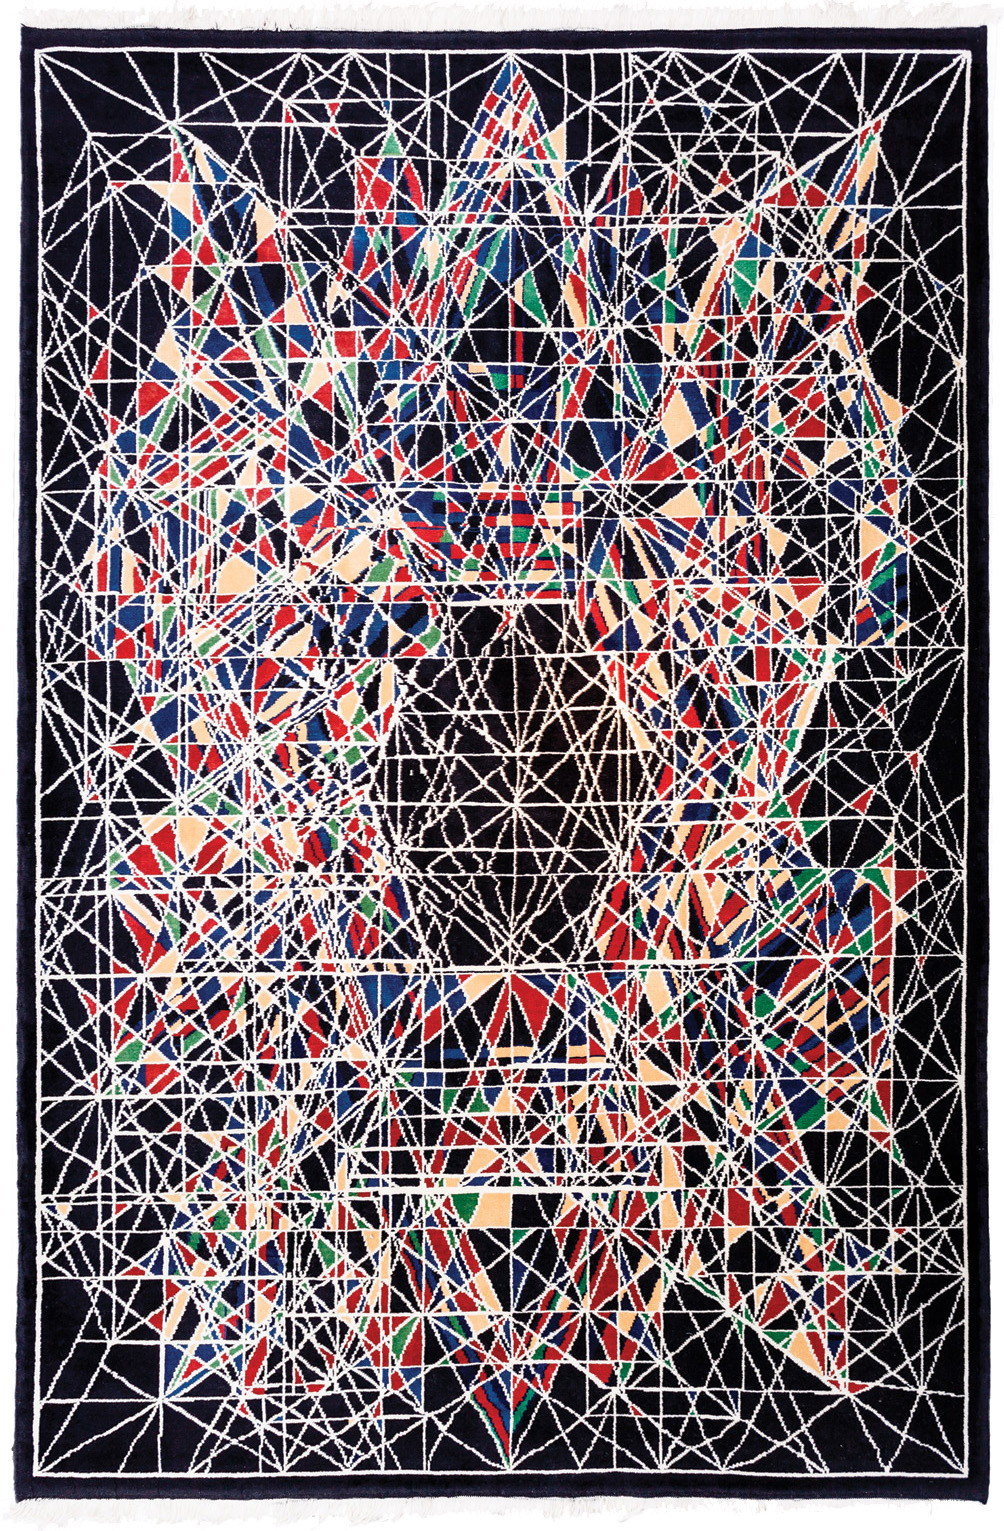 'The Moon' carpet by Viron Erol Vert sized 2.21m x 3.25m (7'3" x 10'8"), circa 2012. | Image courtesy of Viron Erol Vert.